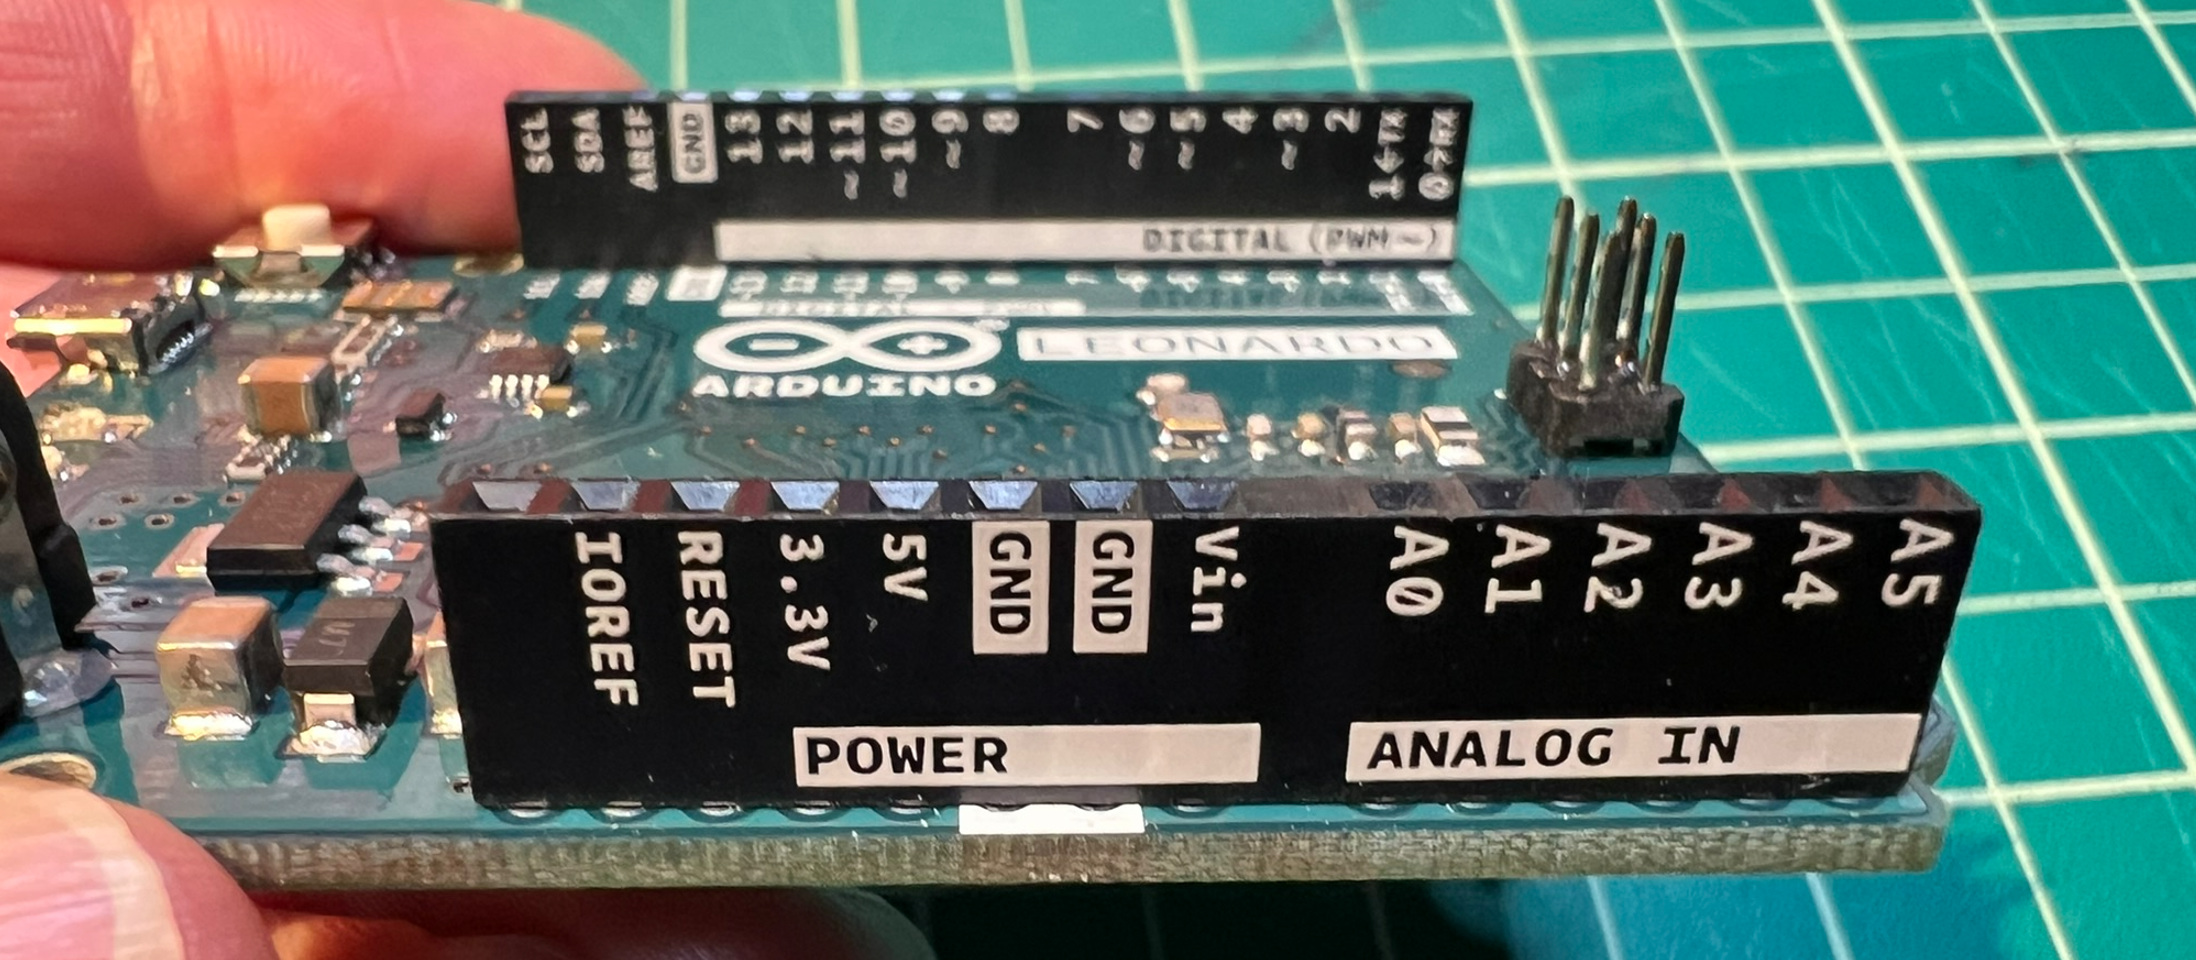 The standard six analog inputs on the Arduino Leonardo